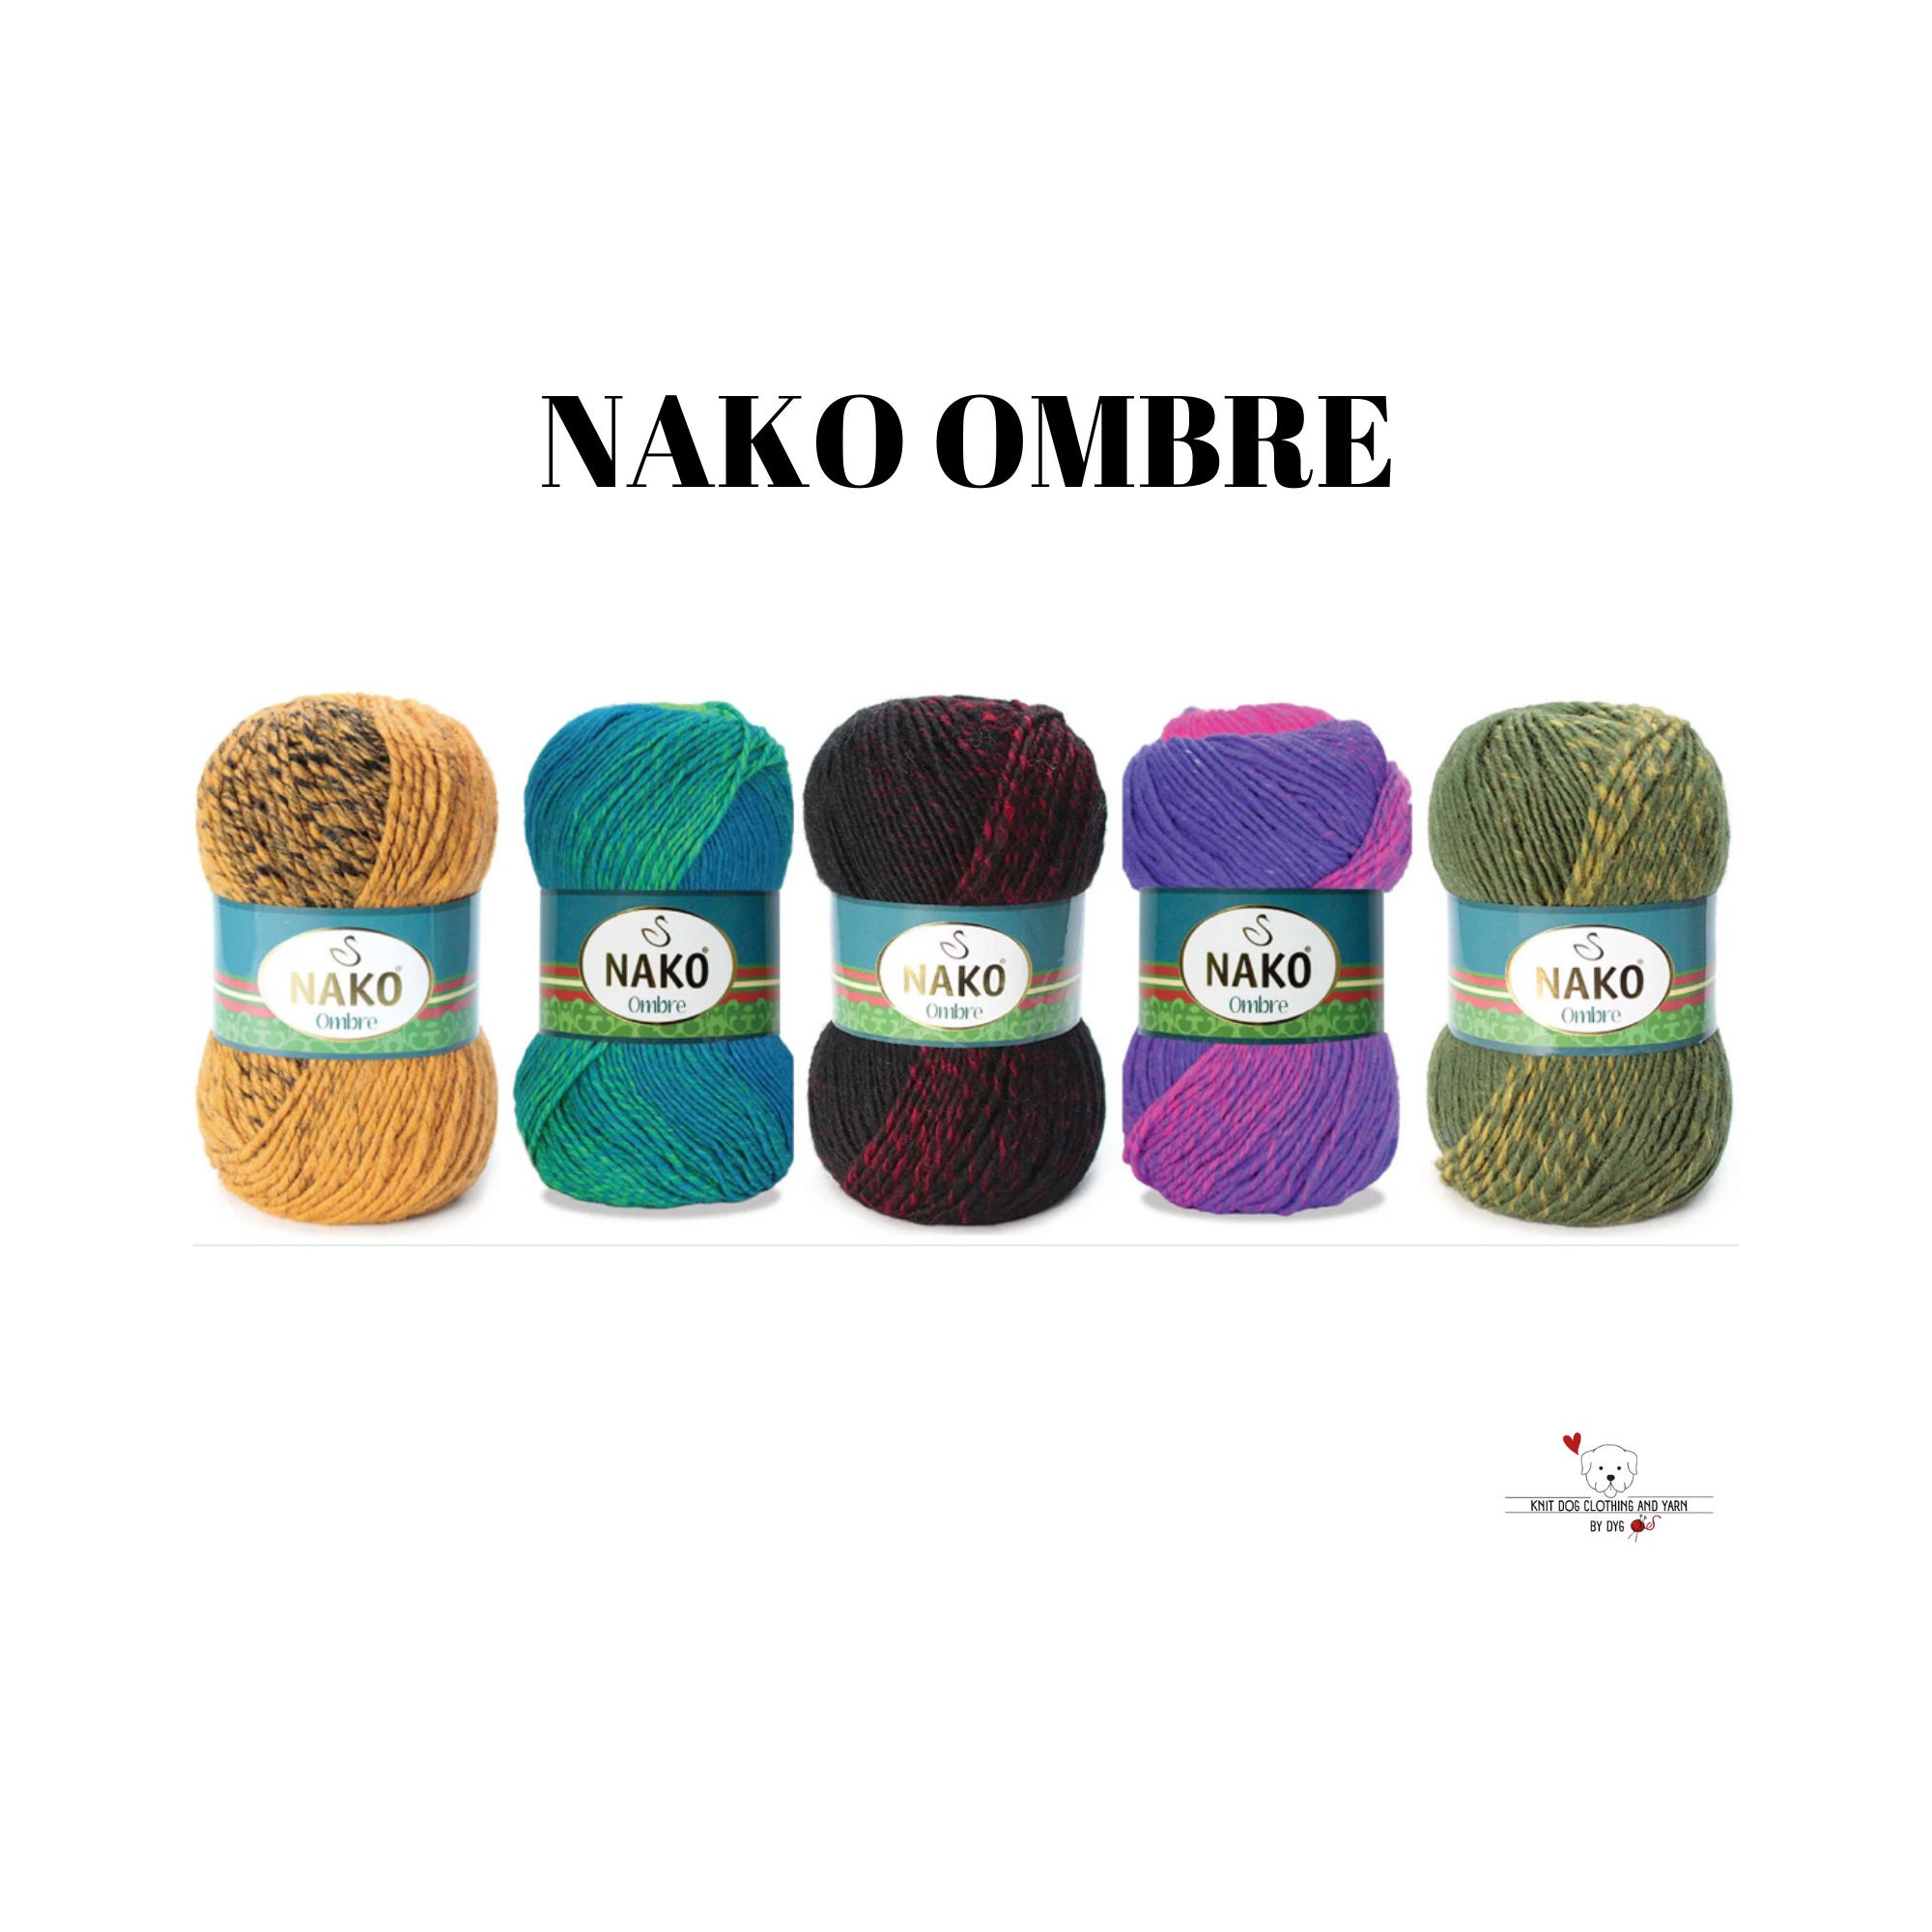 Acrylic Yarn Crochet Knitting Ombre Yarn 3.5 Oz, Yarn for  Knitting/Crocheting Scarf Hats Sweaters Blankets (Plateau Red)